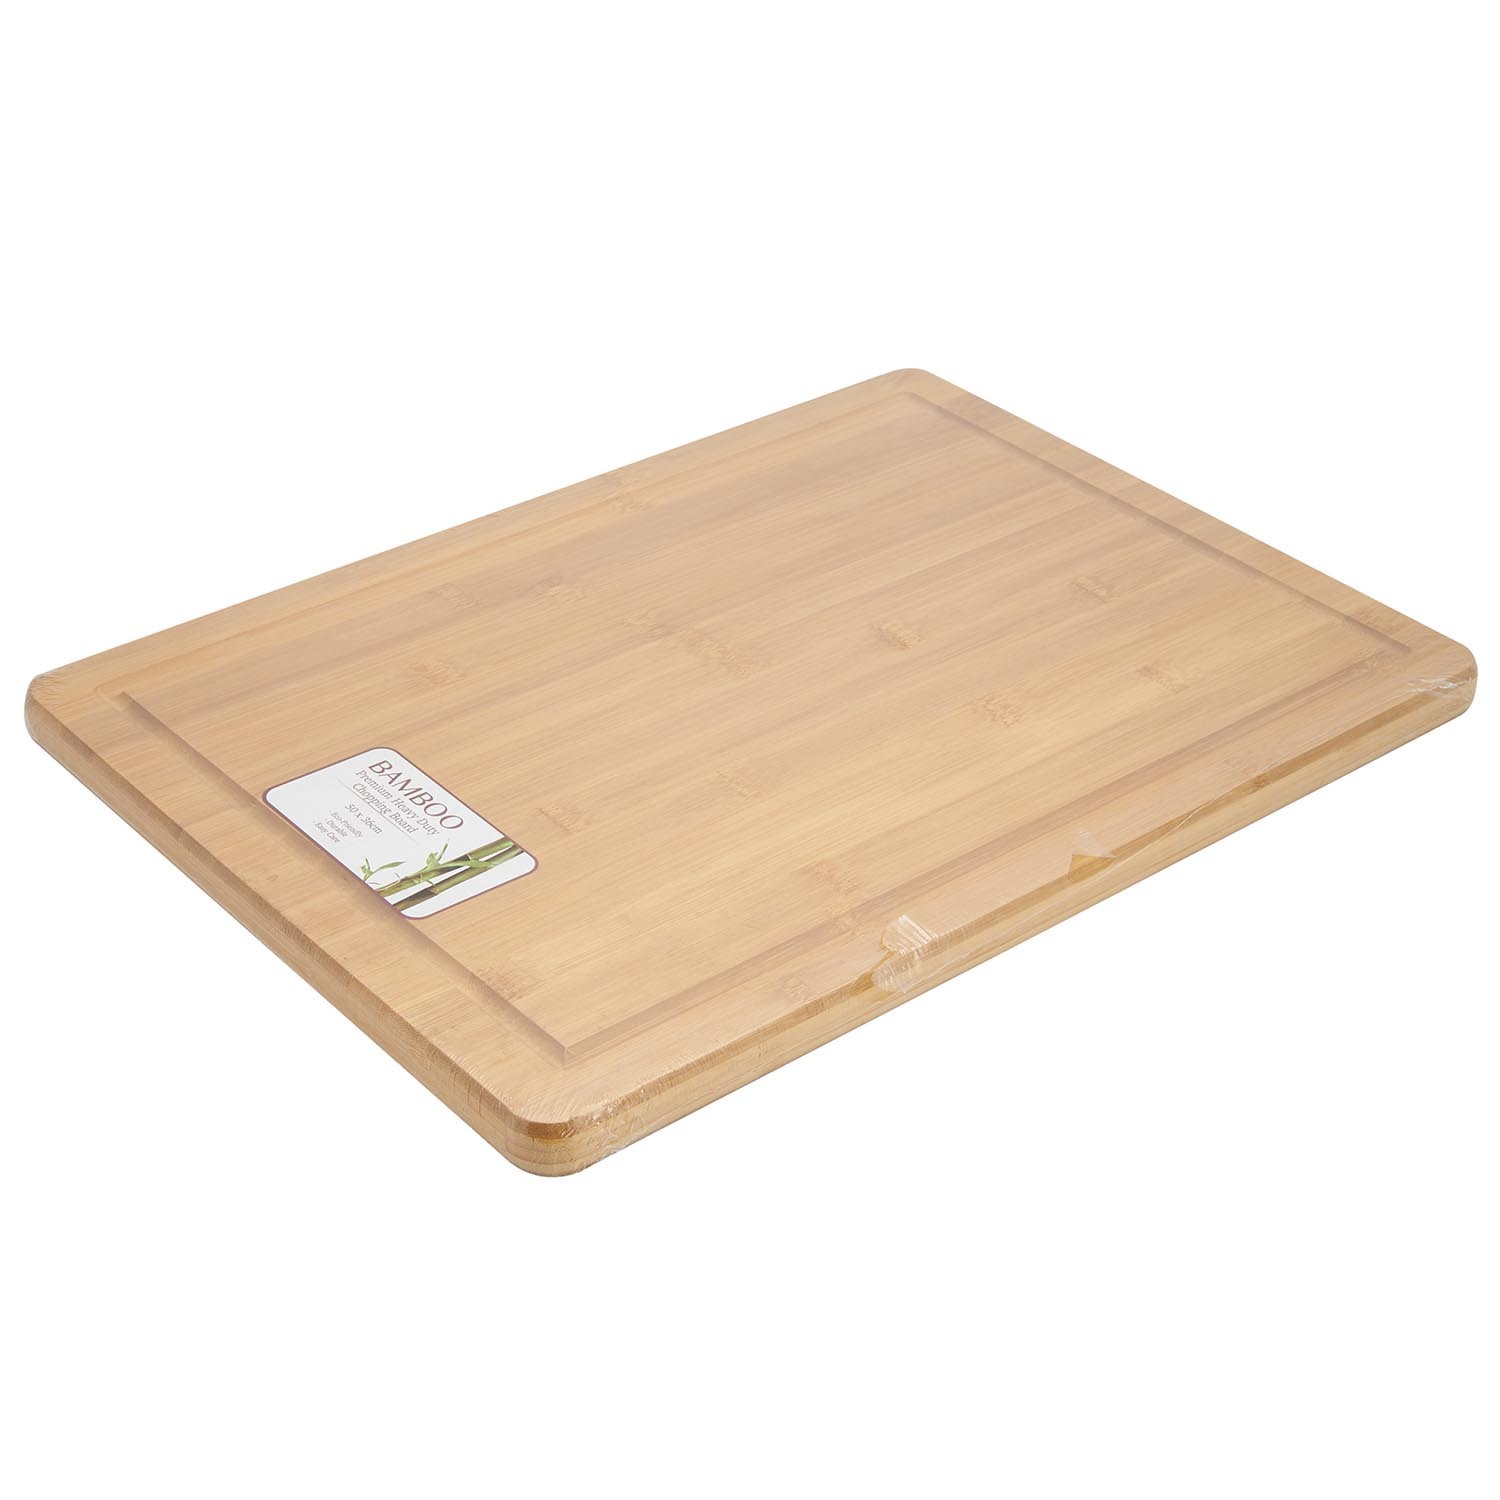 Premium Bamboo Chopping Board - Natural / Large Image 1